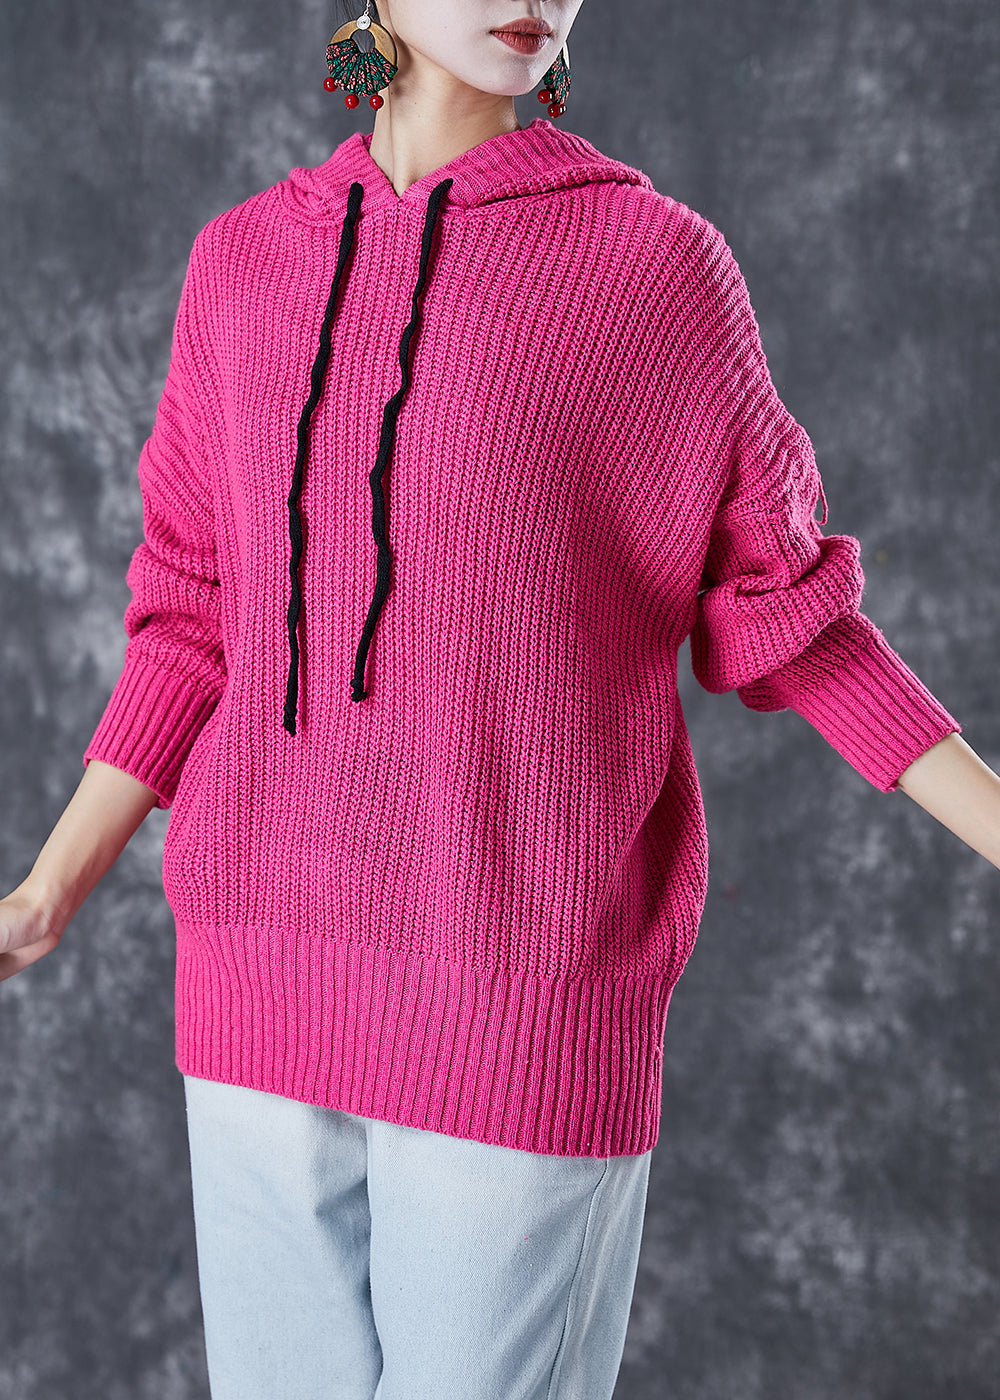 Fashion Rose Hooded Drawstring Knit Sweatshirts Tracksuits Fall